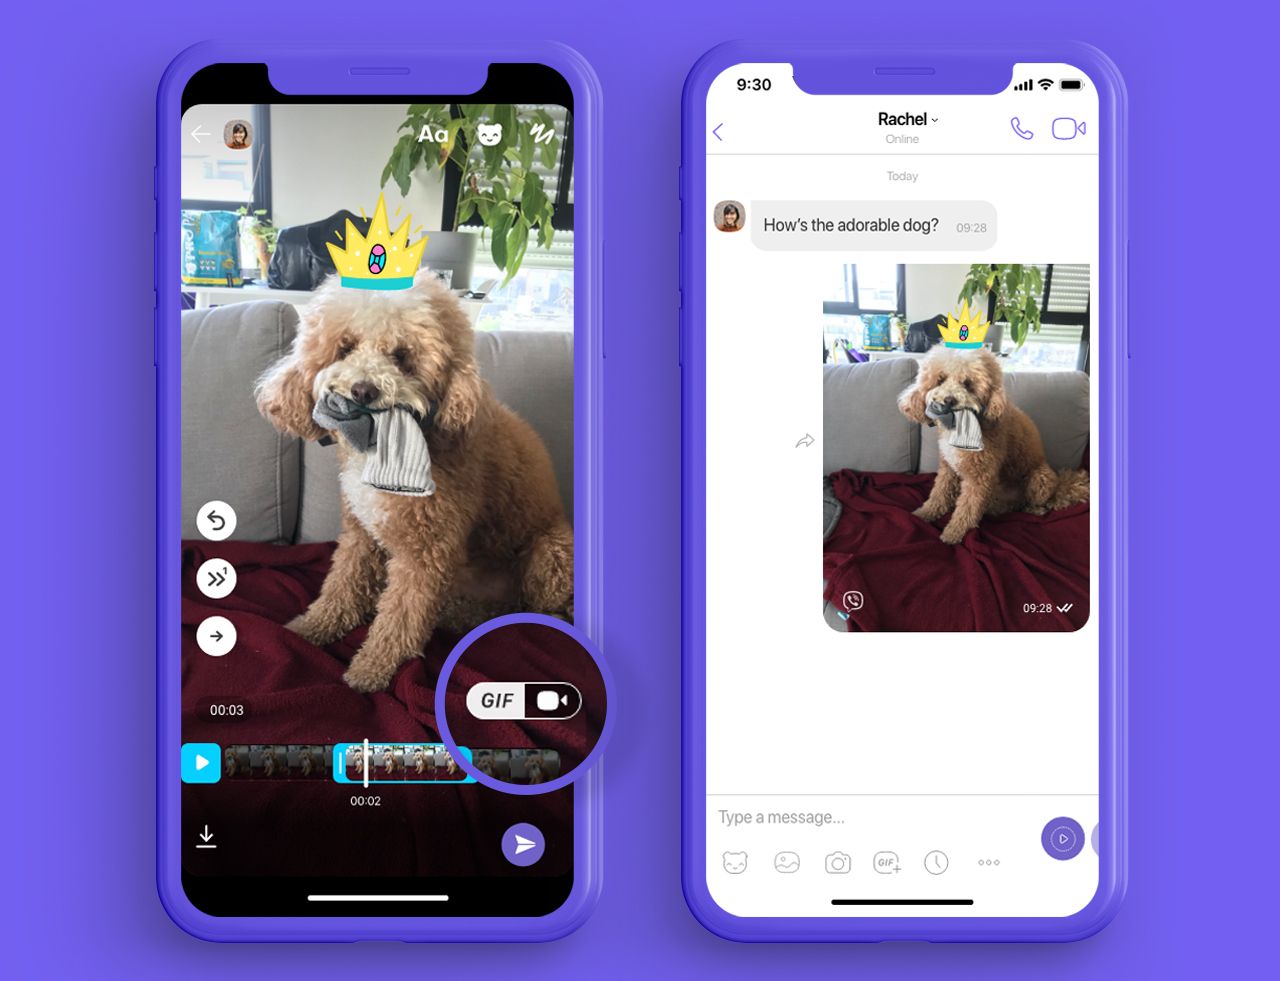 Viber မှ သင့်ကိုယ်ပိုင် တမူထူးခြားသော GIF များကို ဖန်တီးနိုင်မည့် လုပ်ဆောင်ချက်အသစ်တစ်ခု စတင်မိတ်ဆက်